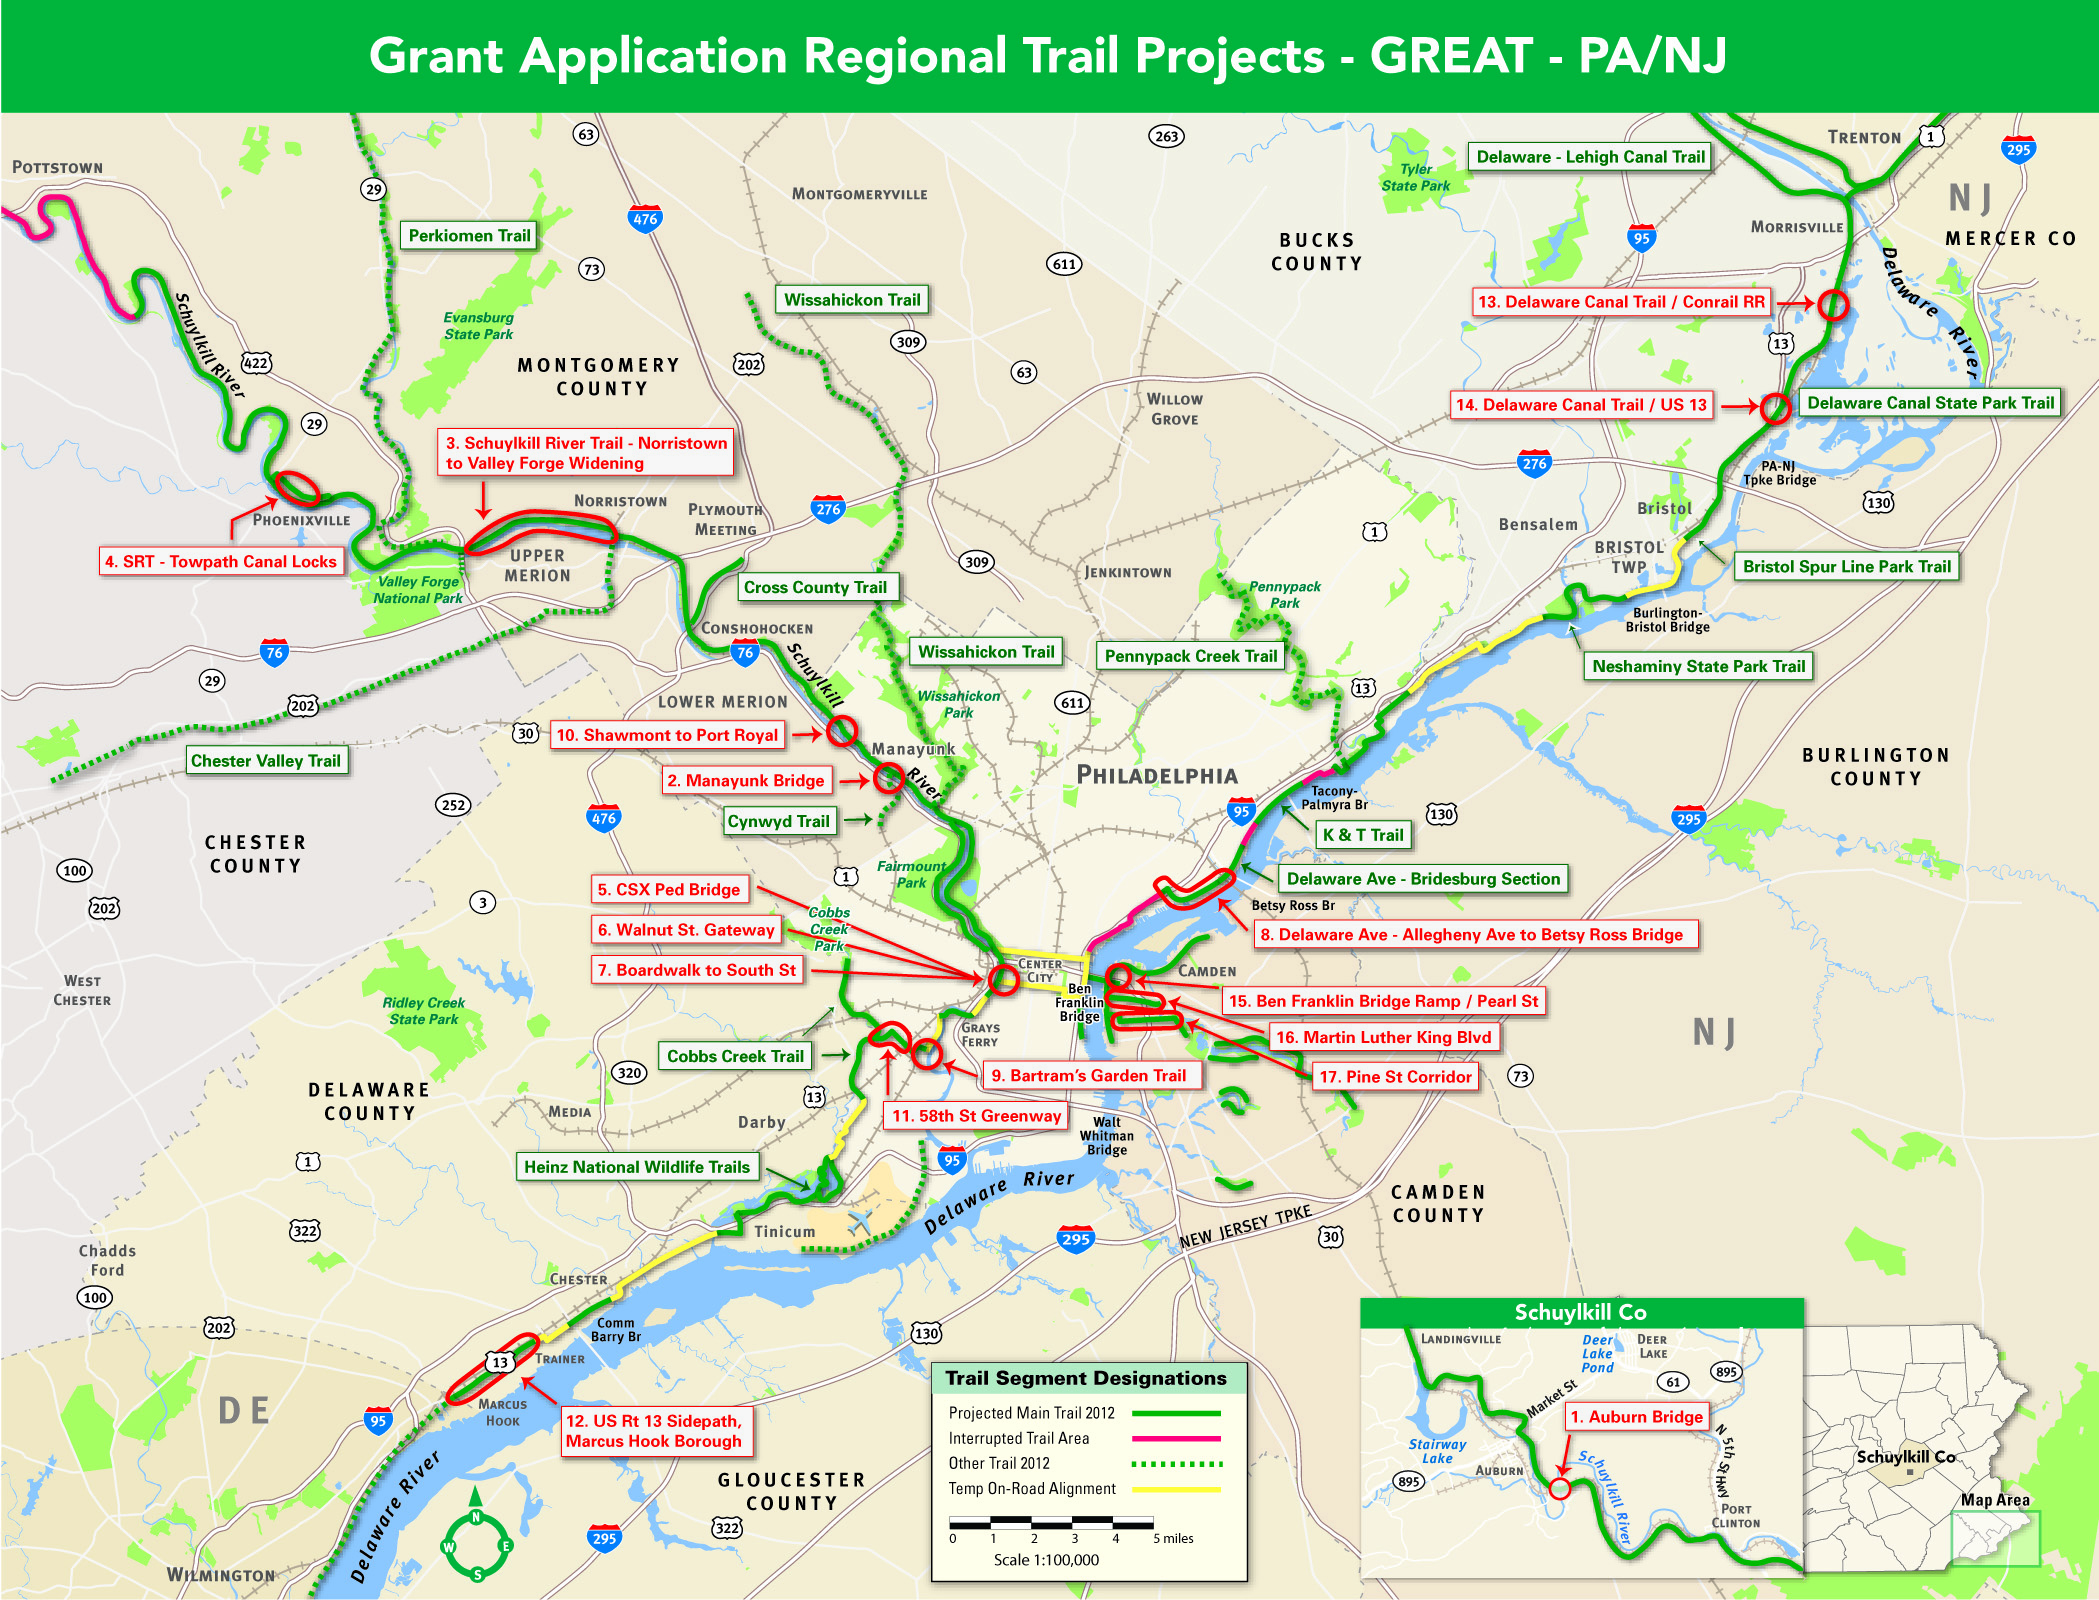 GREAT-PA/NJ trail map